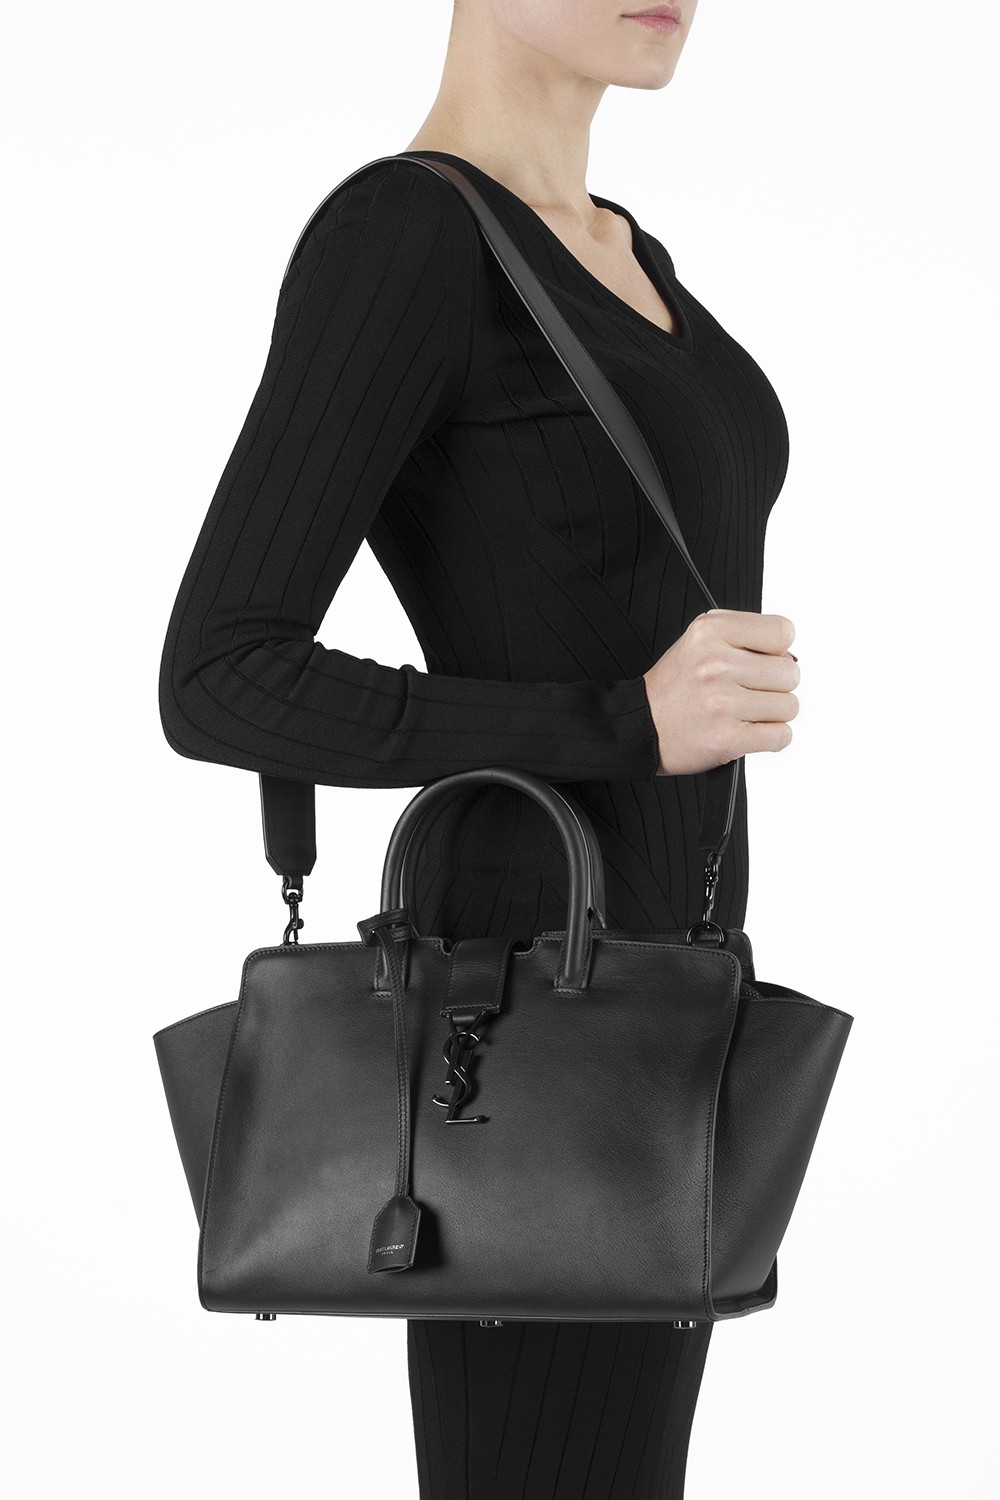 Saint Laurent Small Monogram Downtown Cabas Bag - Black Handle Bags,  Handbags - SNT257198